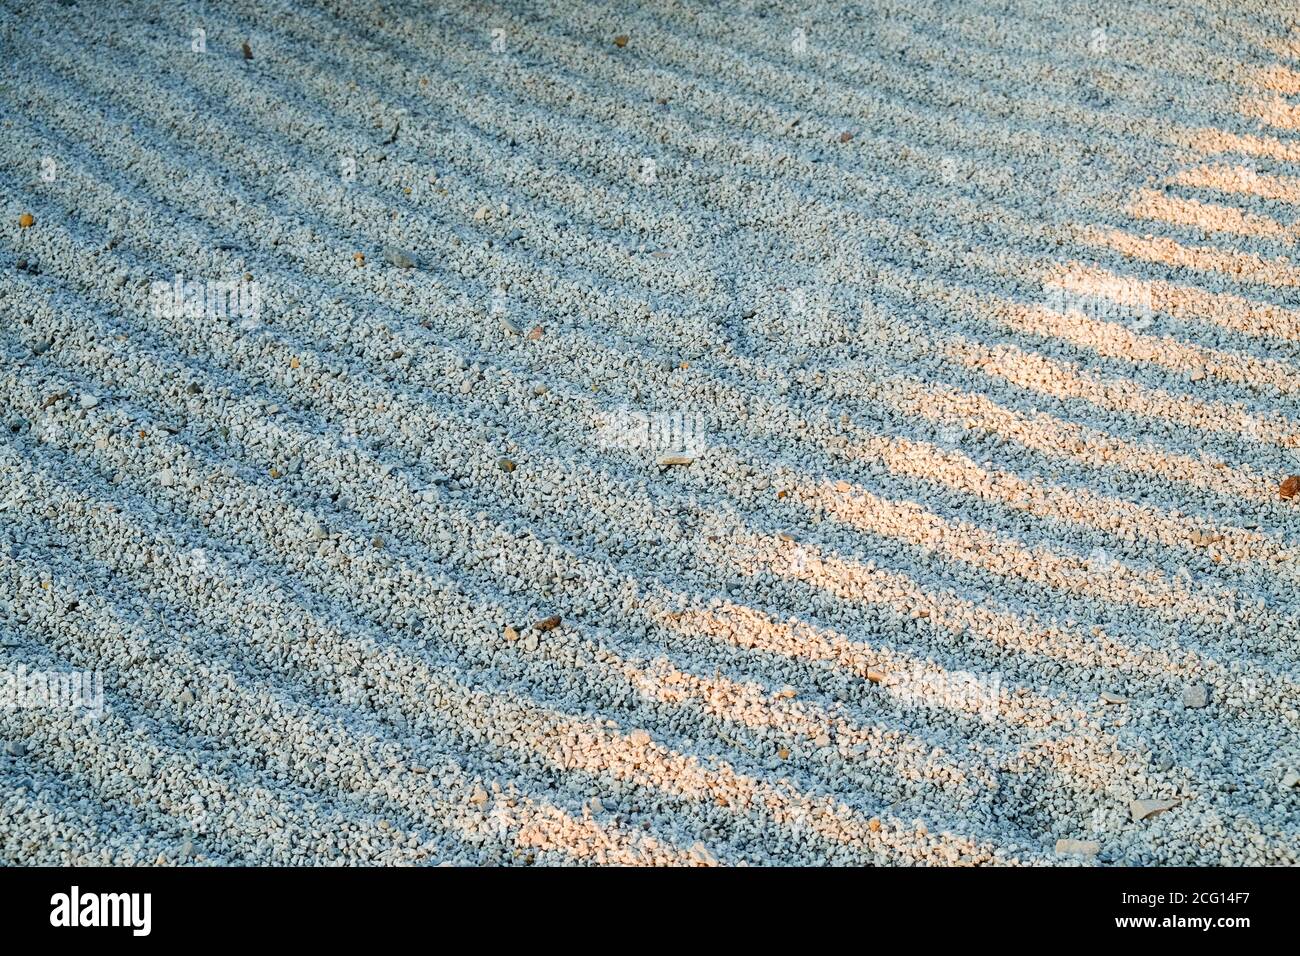 Sunshine ray on surface of gravel grooves symbolic rows in Gravel Stones Garden. Concentric lines of raked up white gravel in Japanese Zen Garden. Stock Photo